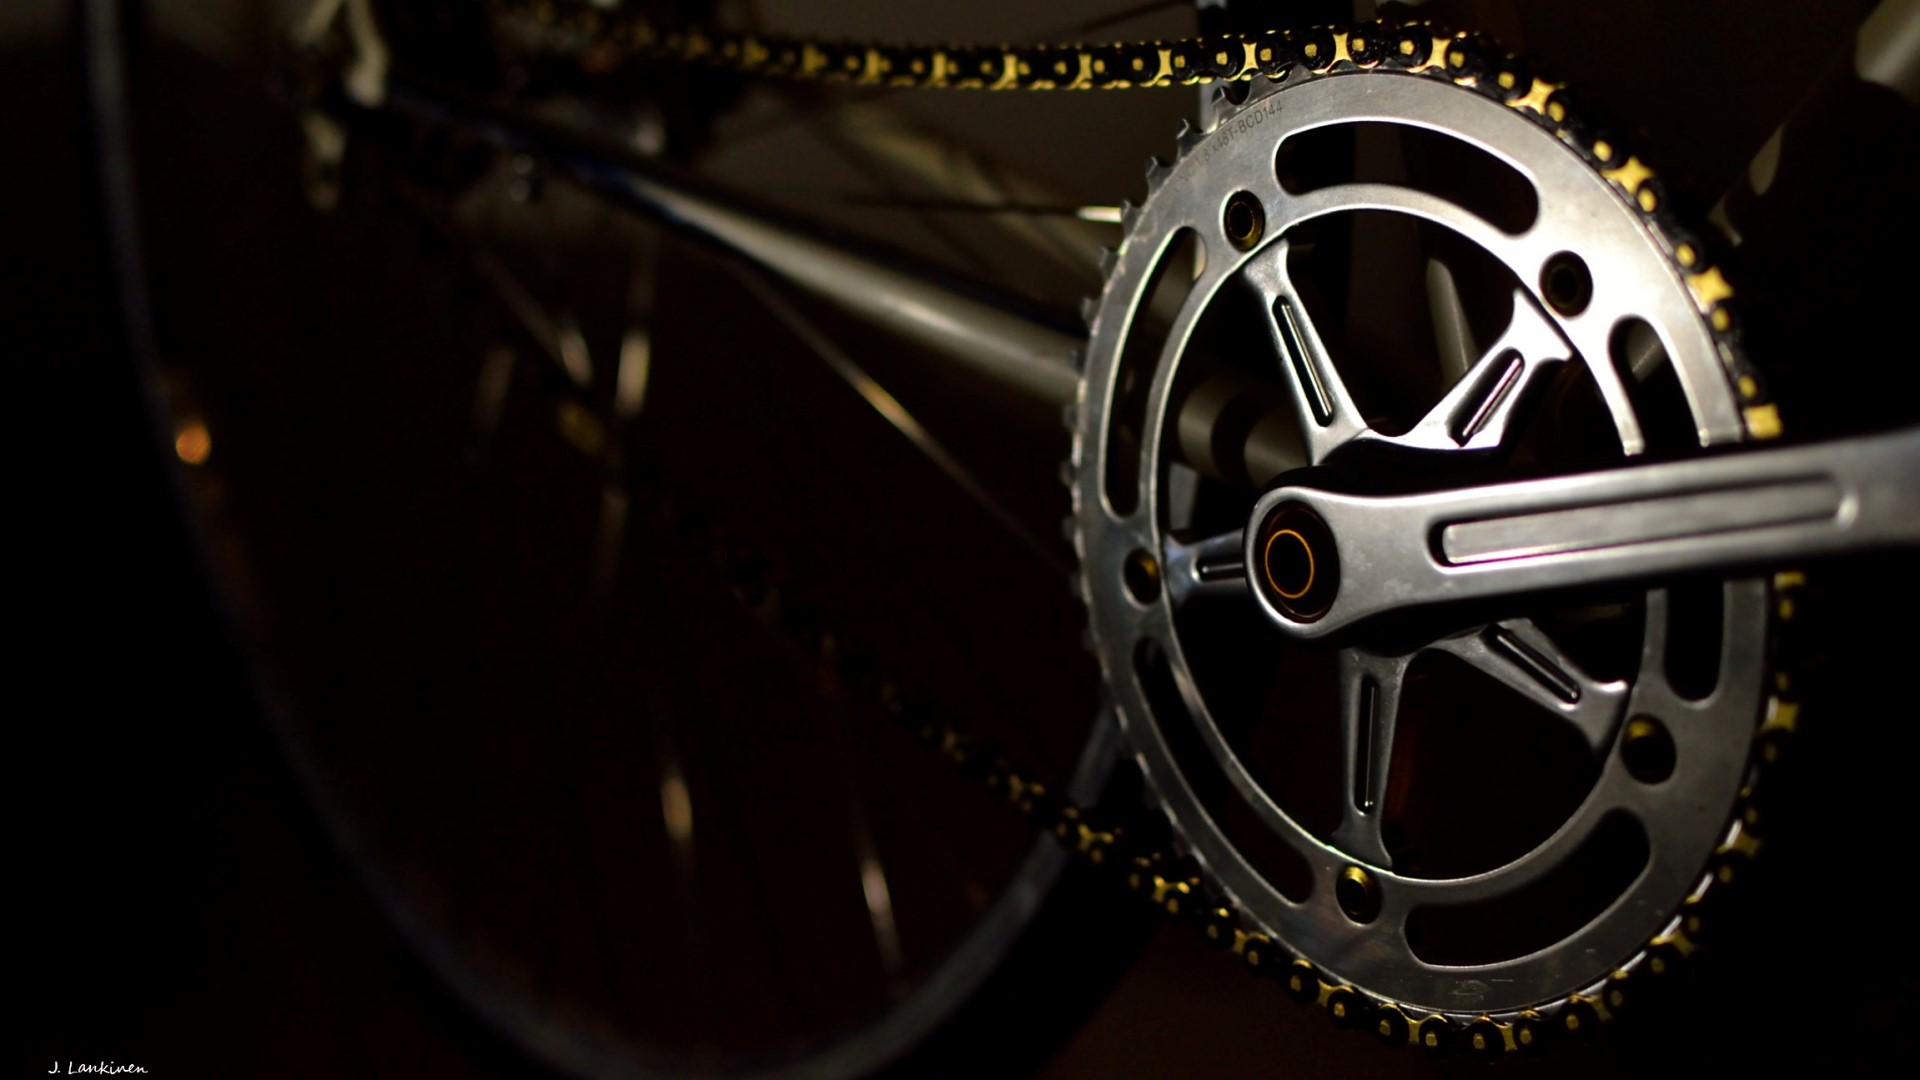 General 1920x1080 bicycle dark metal mechanics gold wheels shiny gloss gears